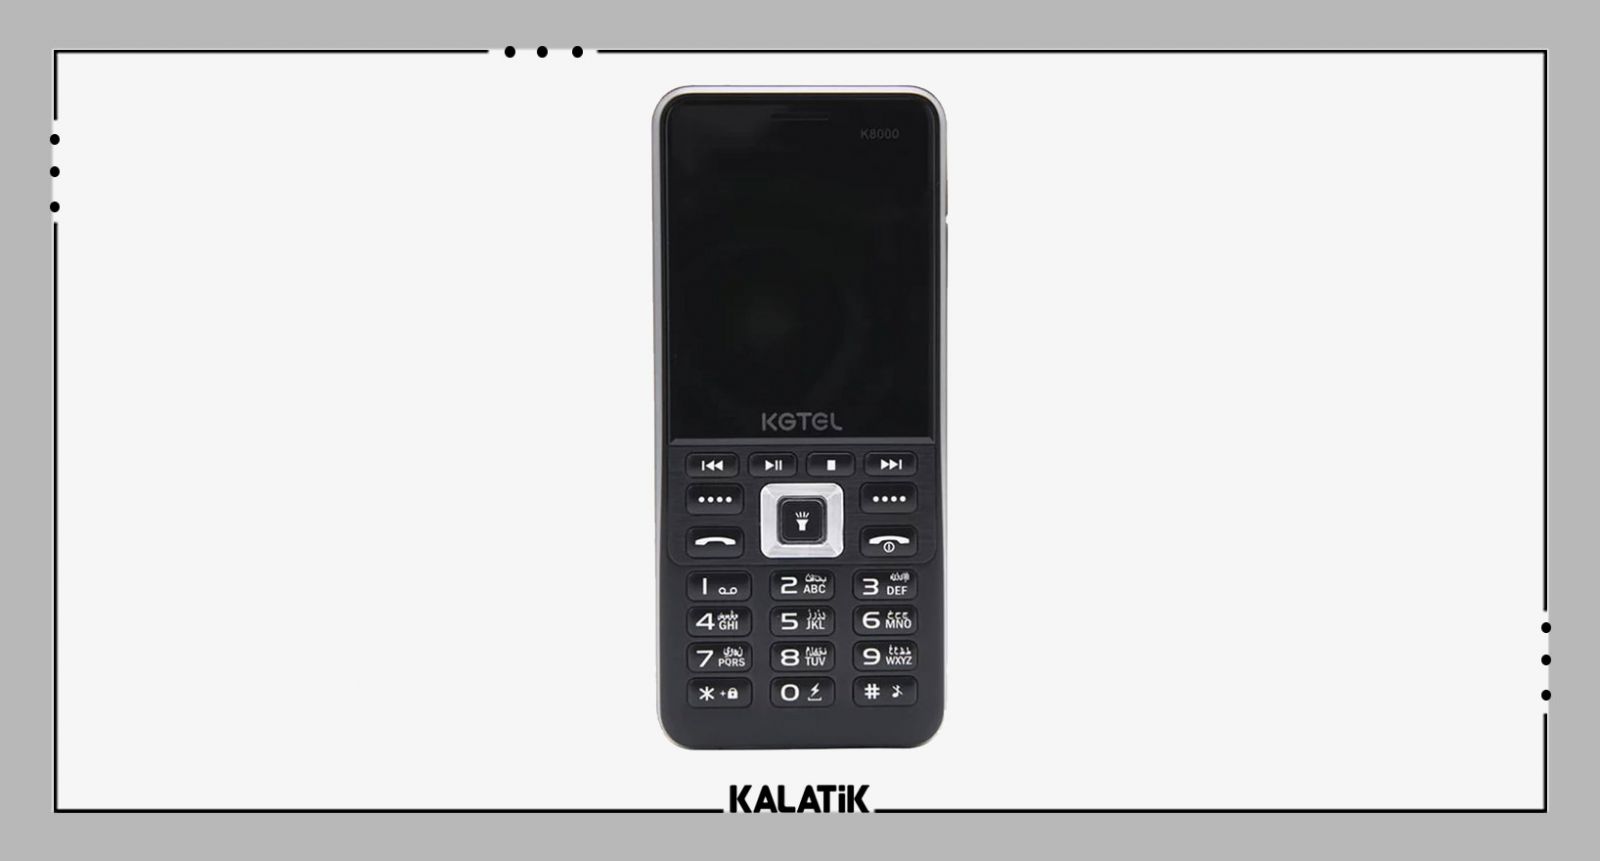 گوشی موبایل کاجیتل مدل K8000